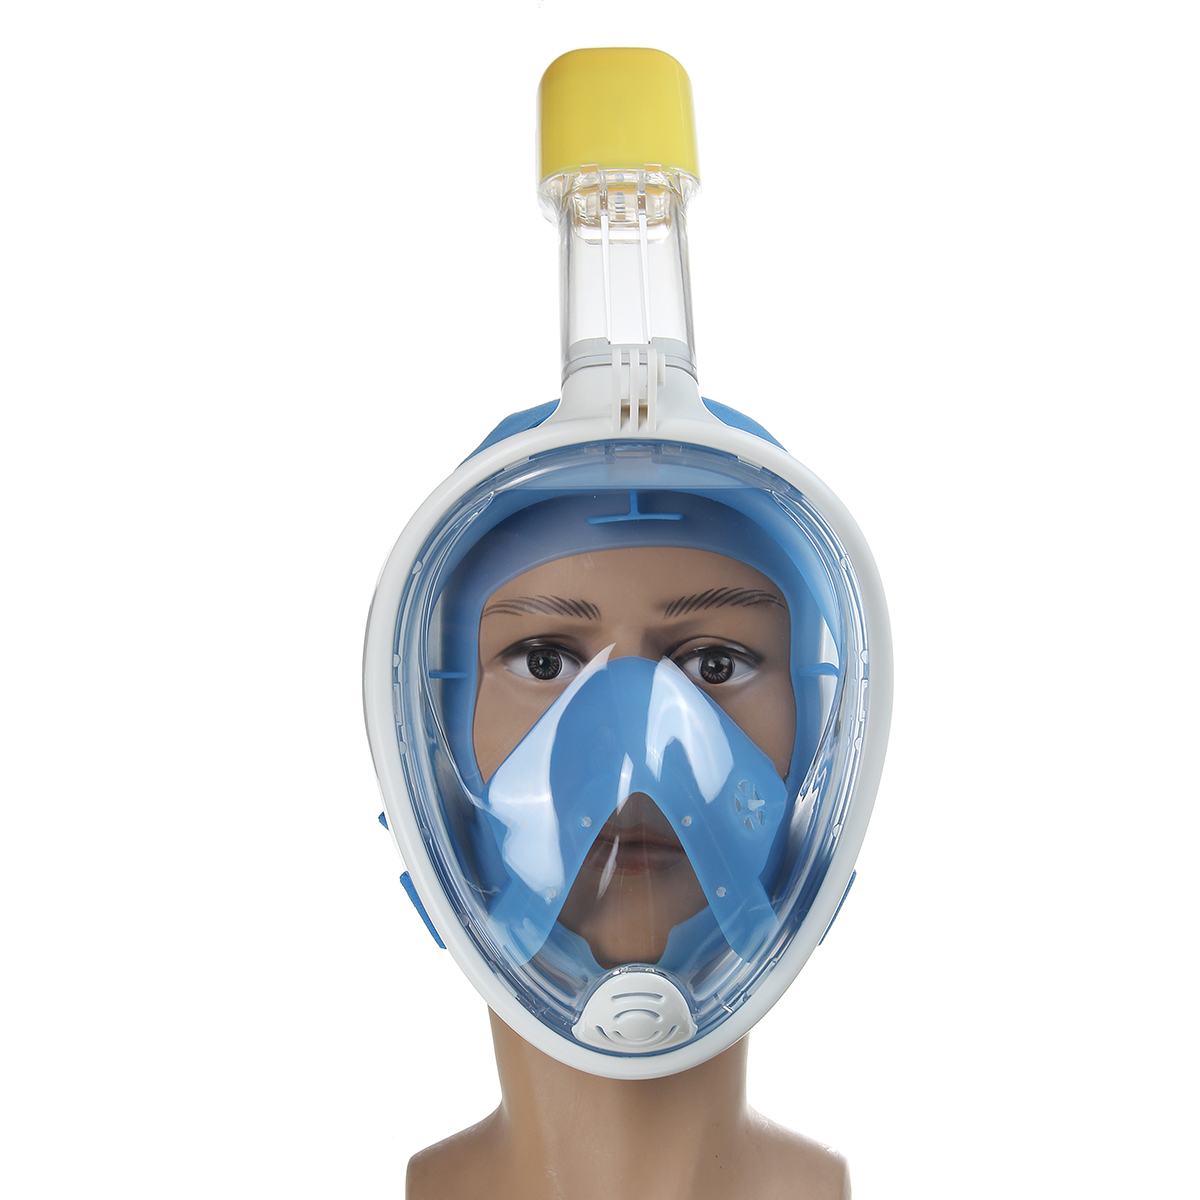 Full-Face-Snorkel-Mask-180deg-Panoramic-Viewing-Anti-Fog-Anti-Leak-Diving-Mask-Outdoor-Water-Sport-1700406-9